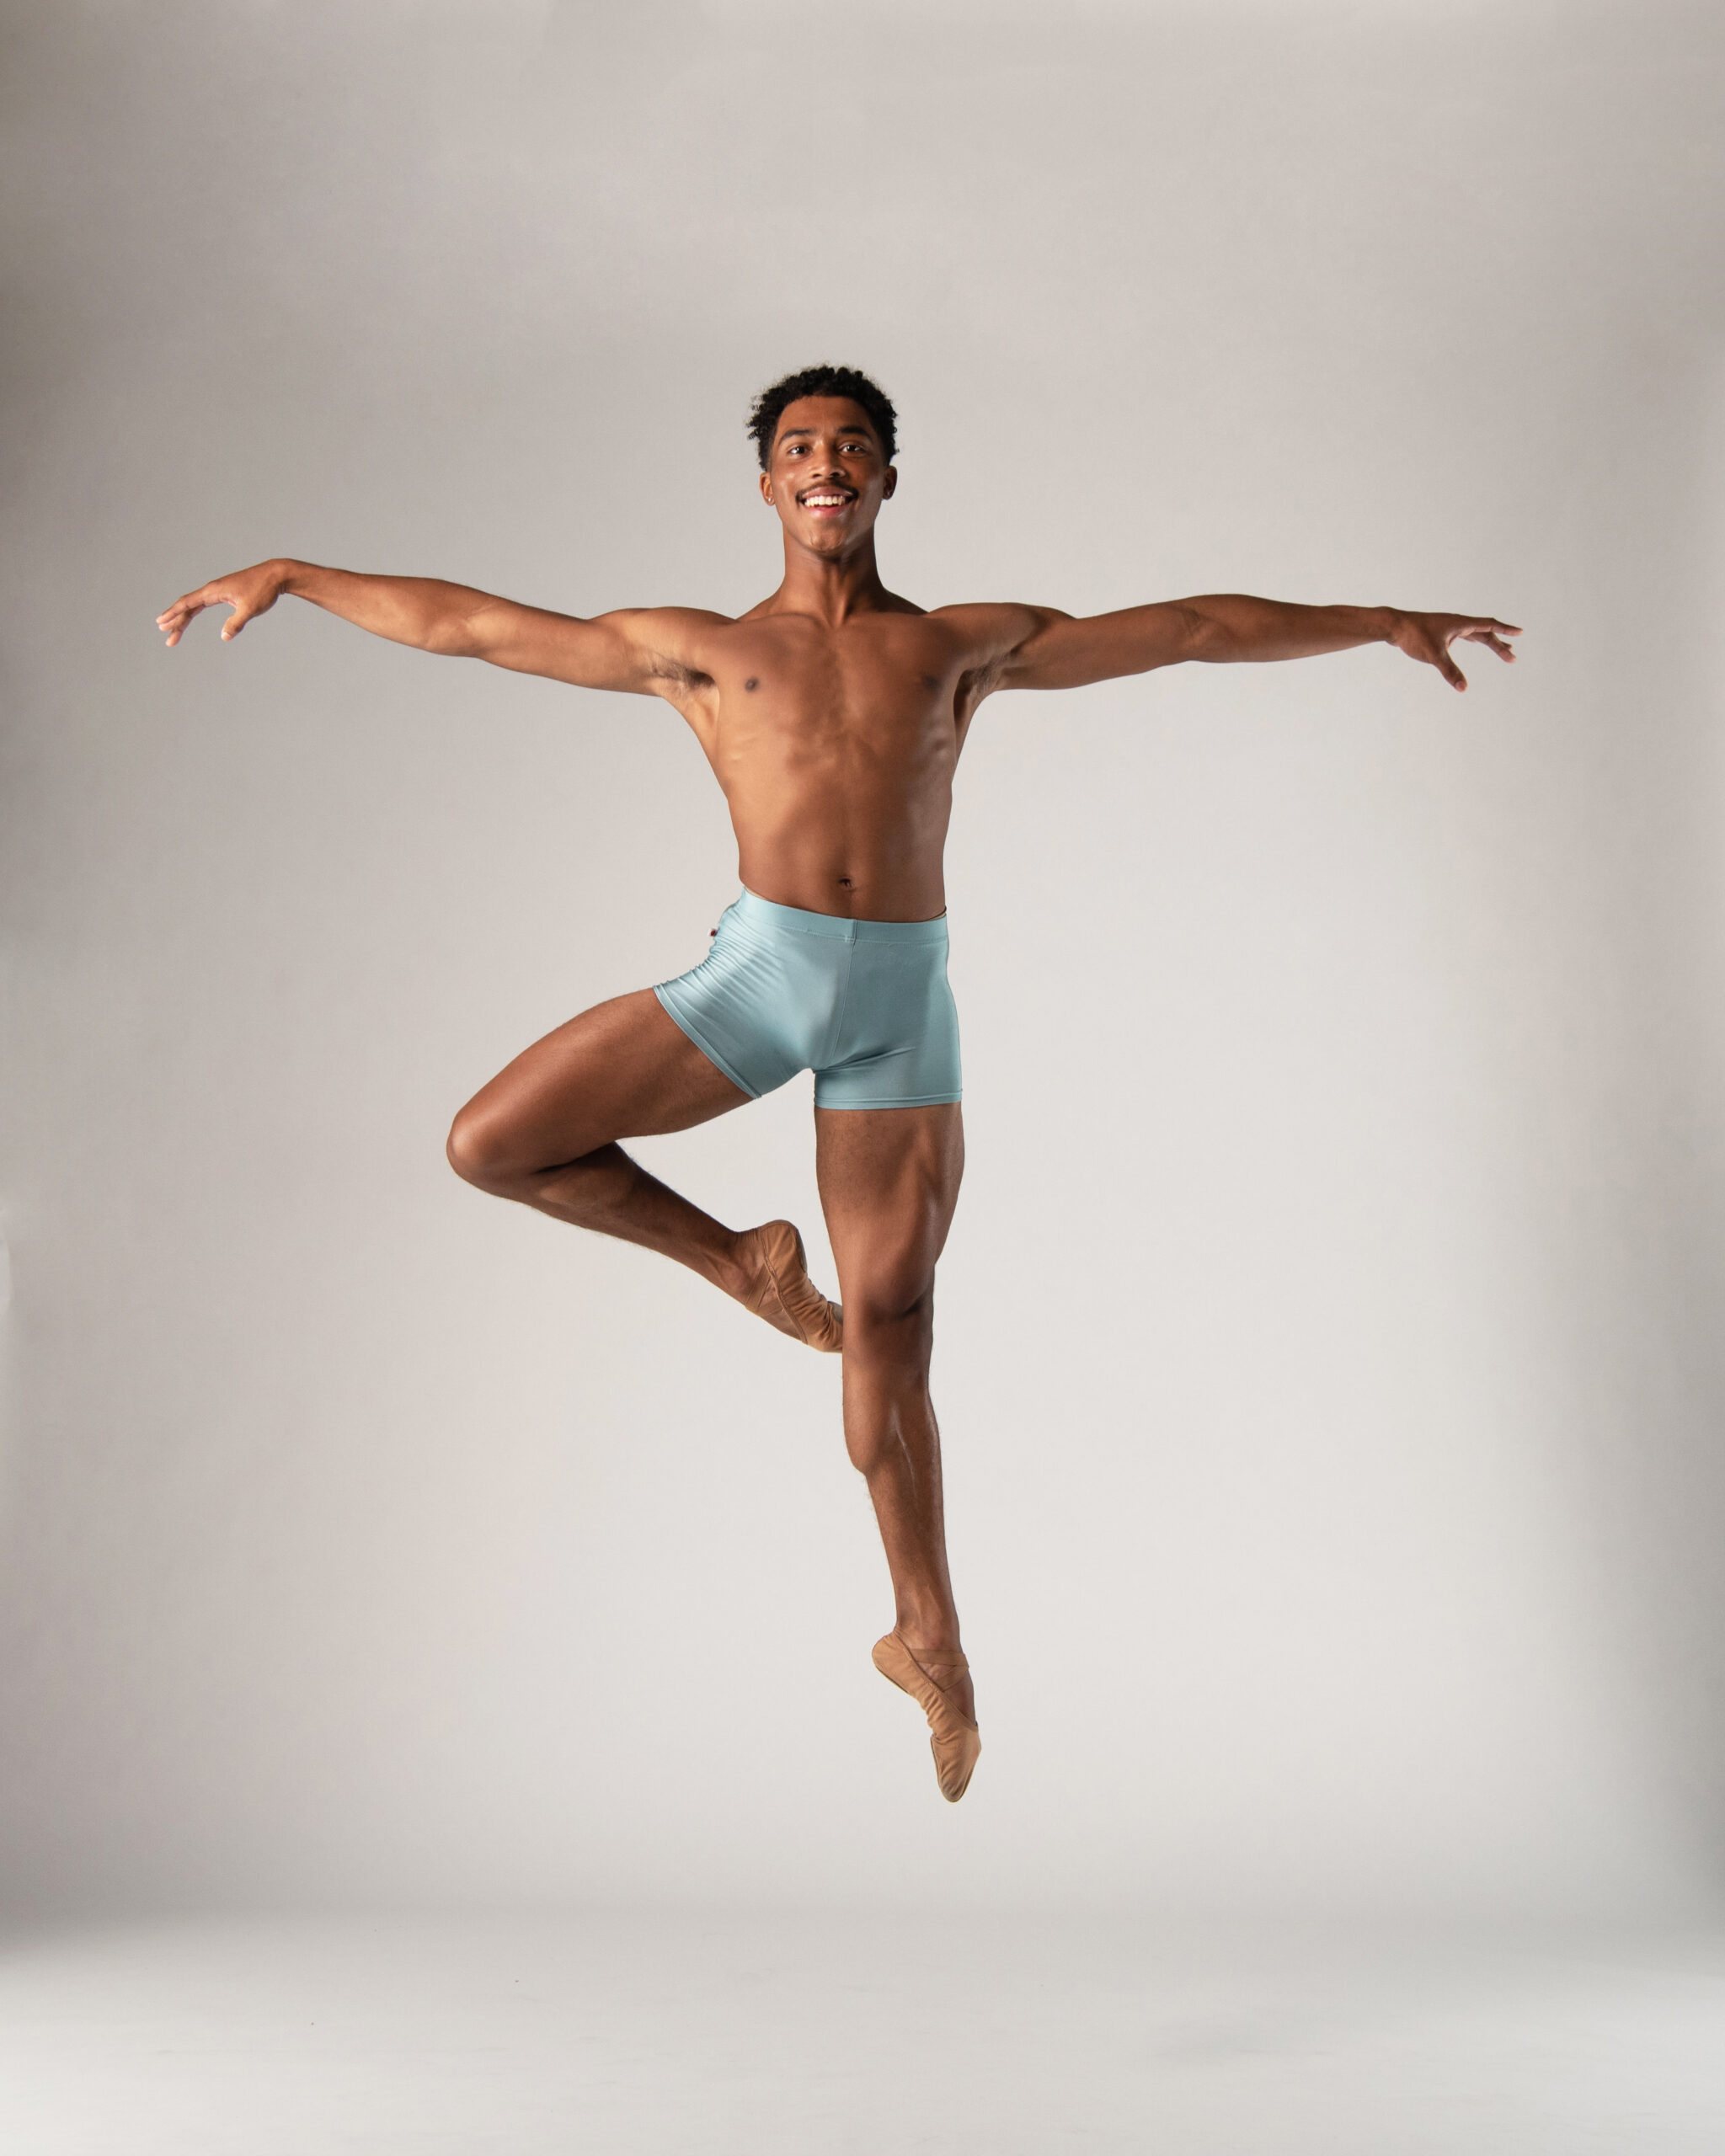 Ballet dancer poses Stock Photo 07 free download